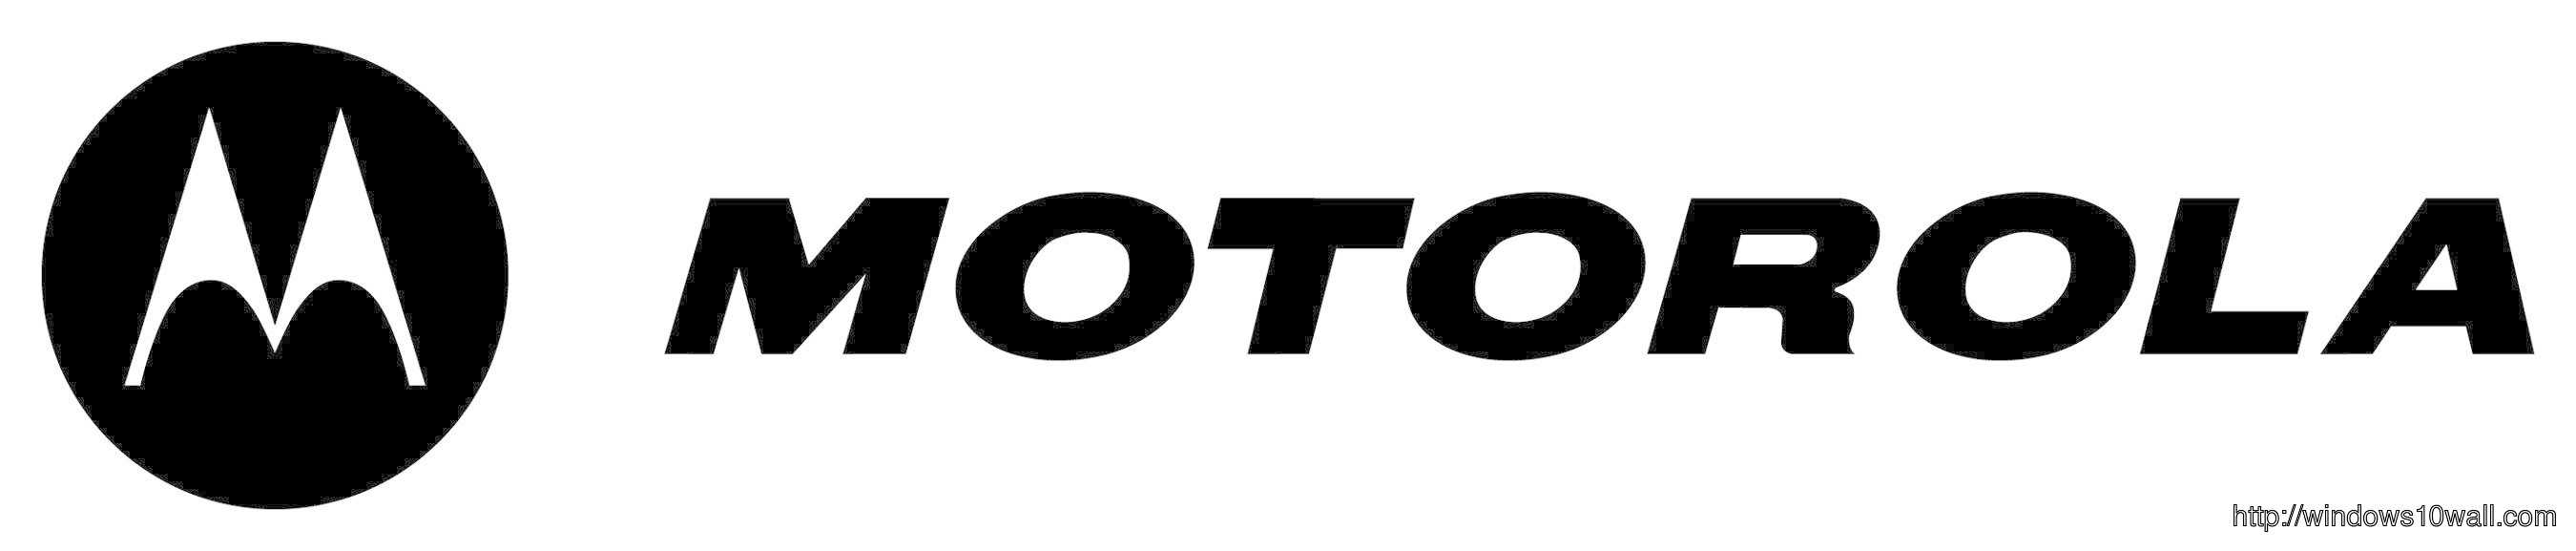 MOTOROLA Background Logo